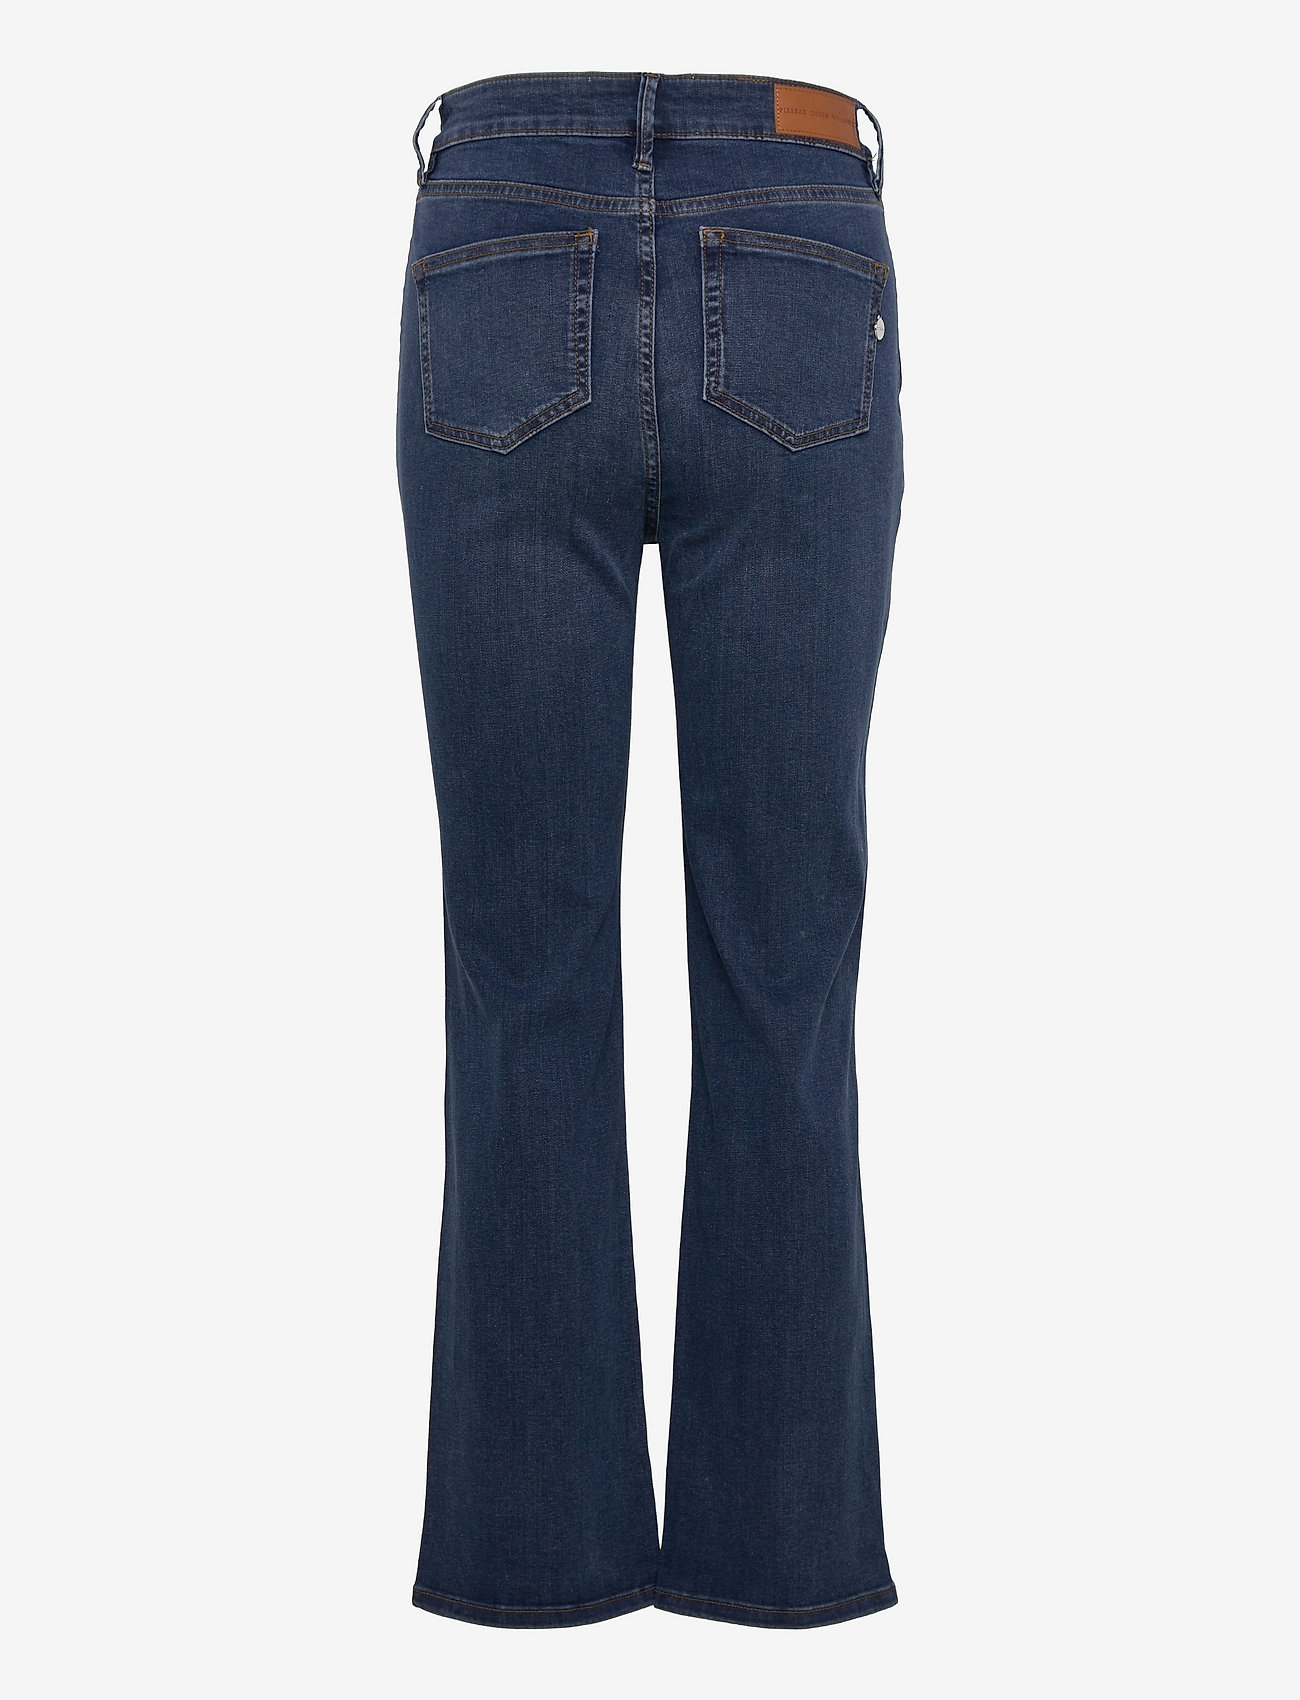 Pieszak - Jenora french jeans wash Malcesine - flared jeans - denim blue - 1